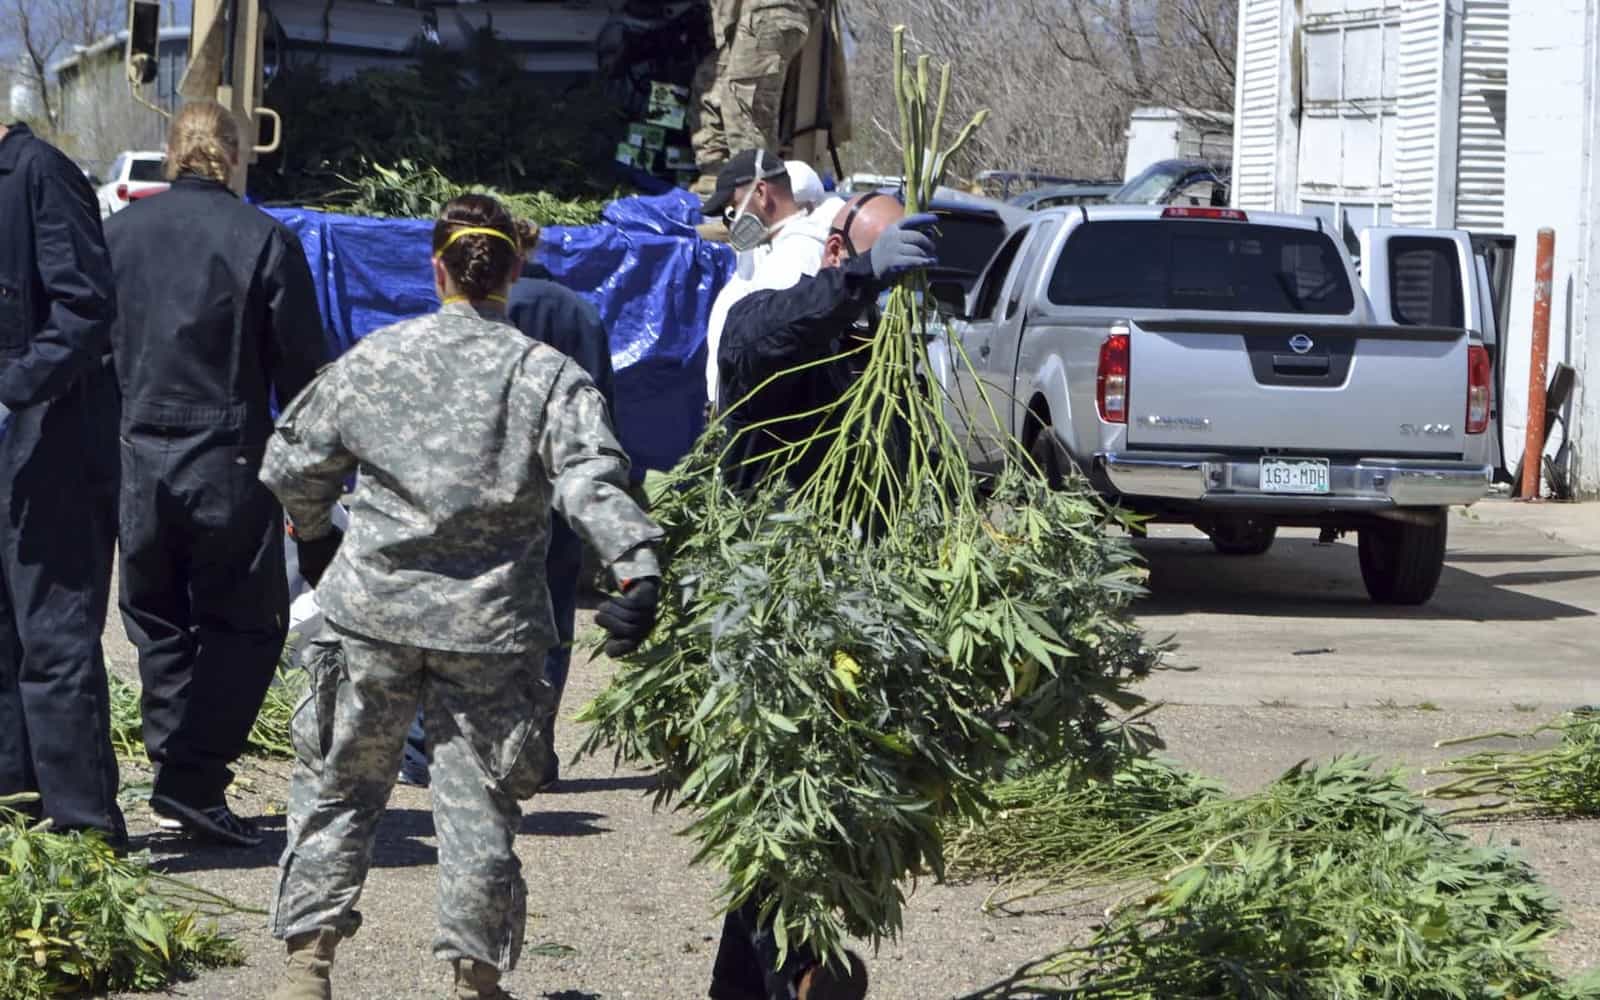 Colorado Cannabis Taxes Funds Busts of Illegal Marijuana Growers